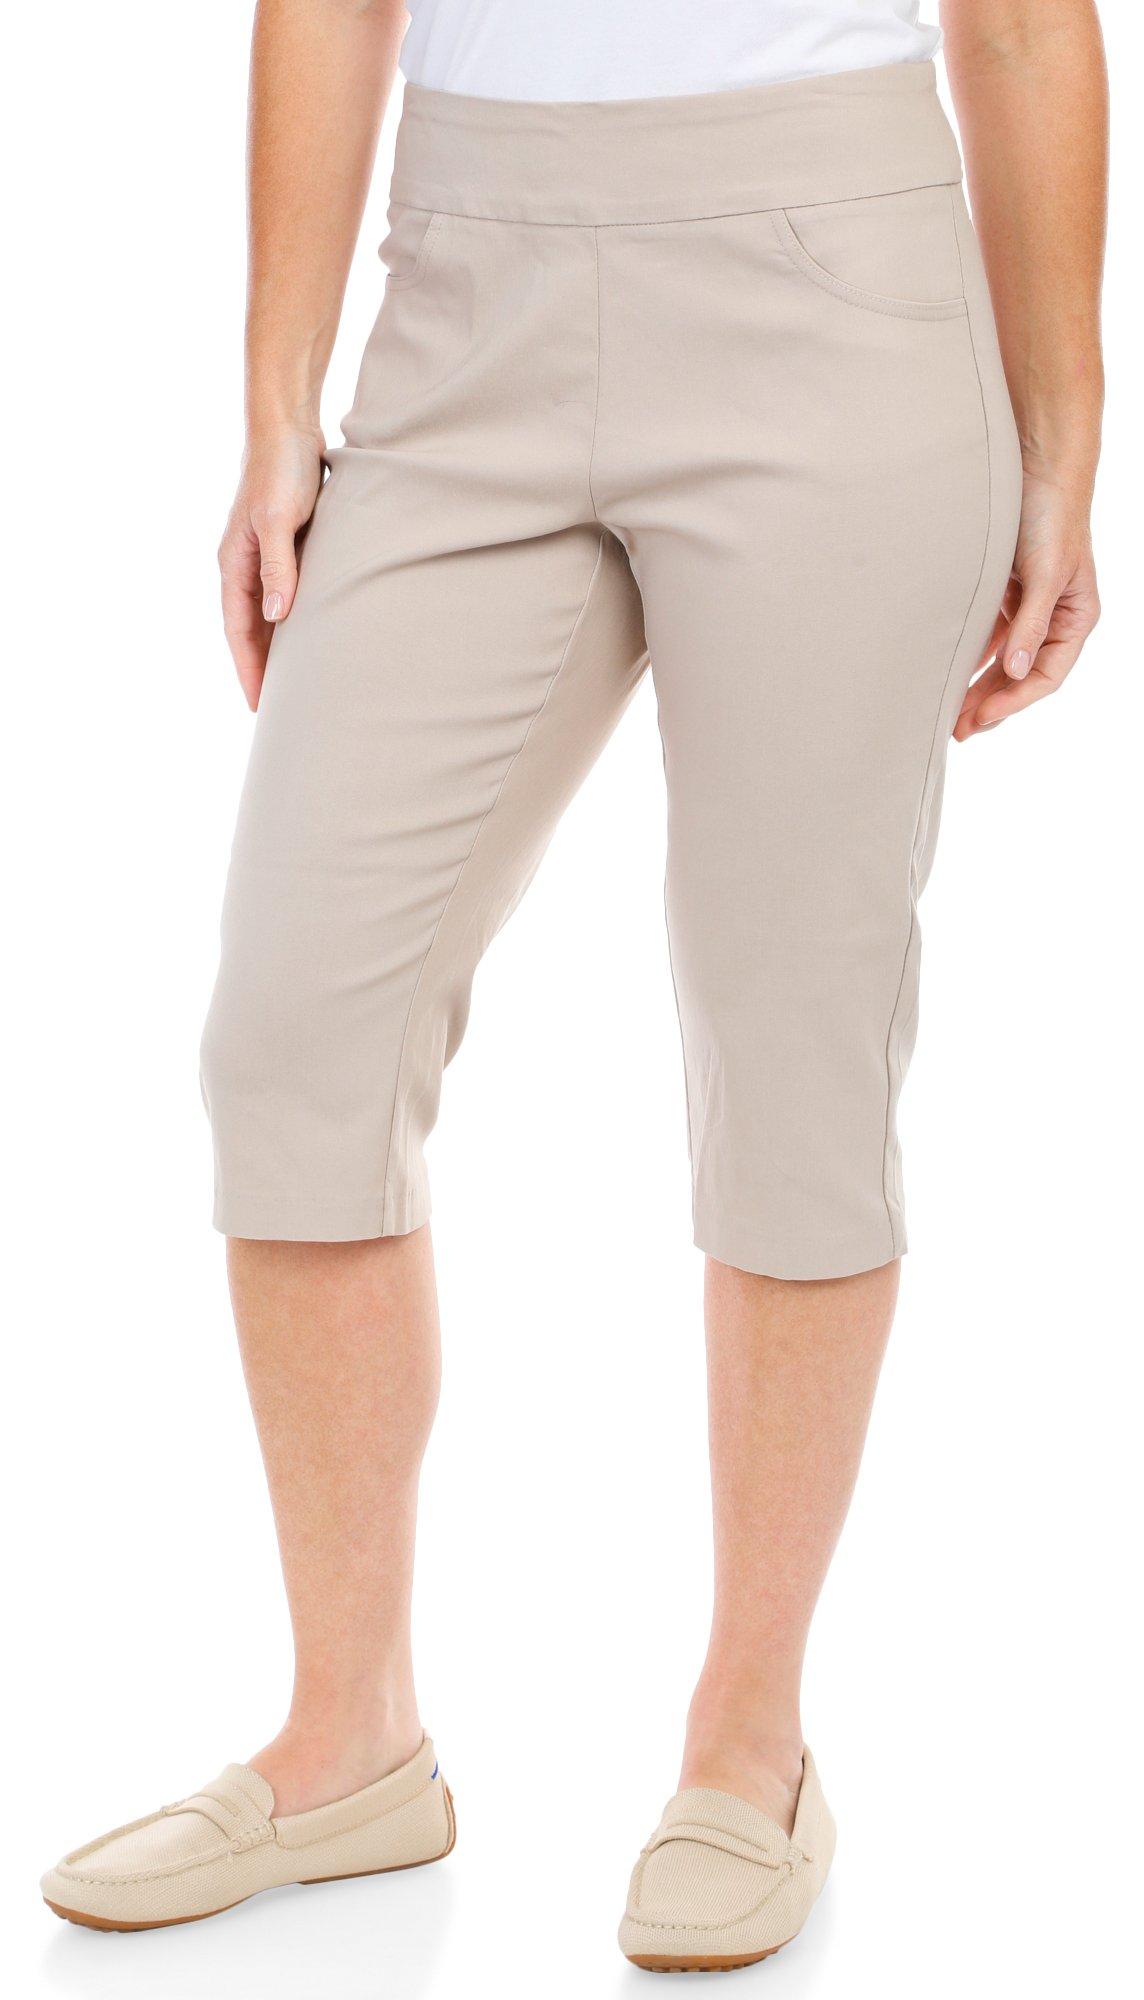 Women's Solid Capri Pants